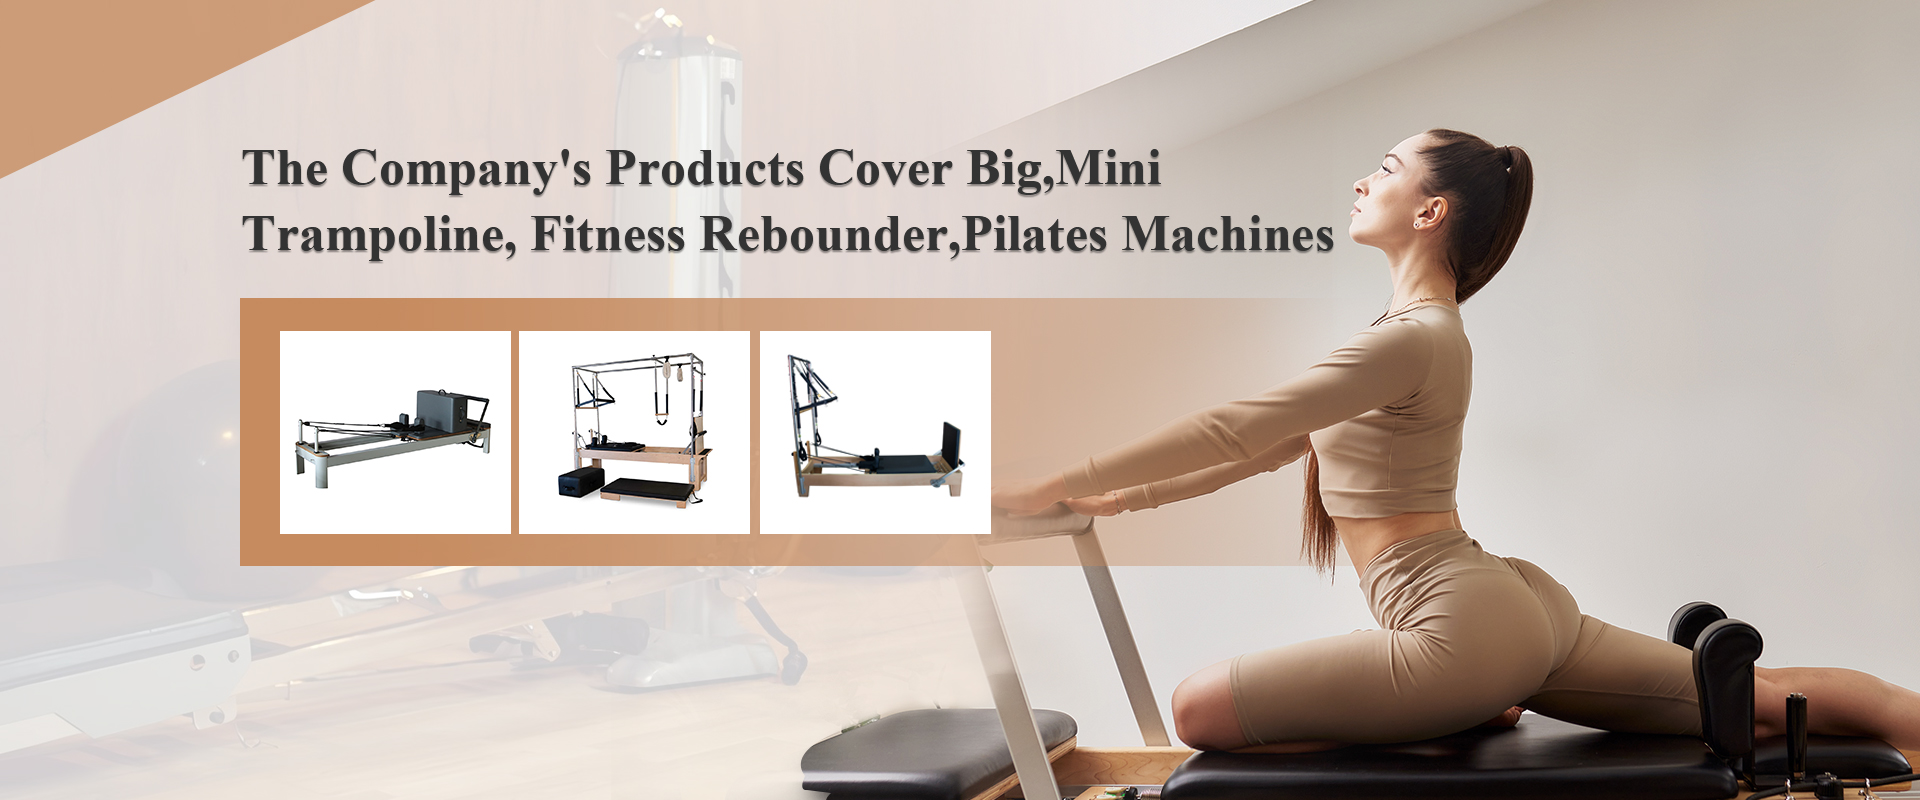 Big, Mini, Trampoline, Fitness Rebounder,Pilates Machines